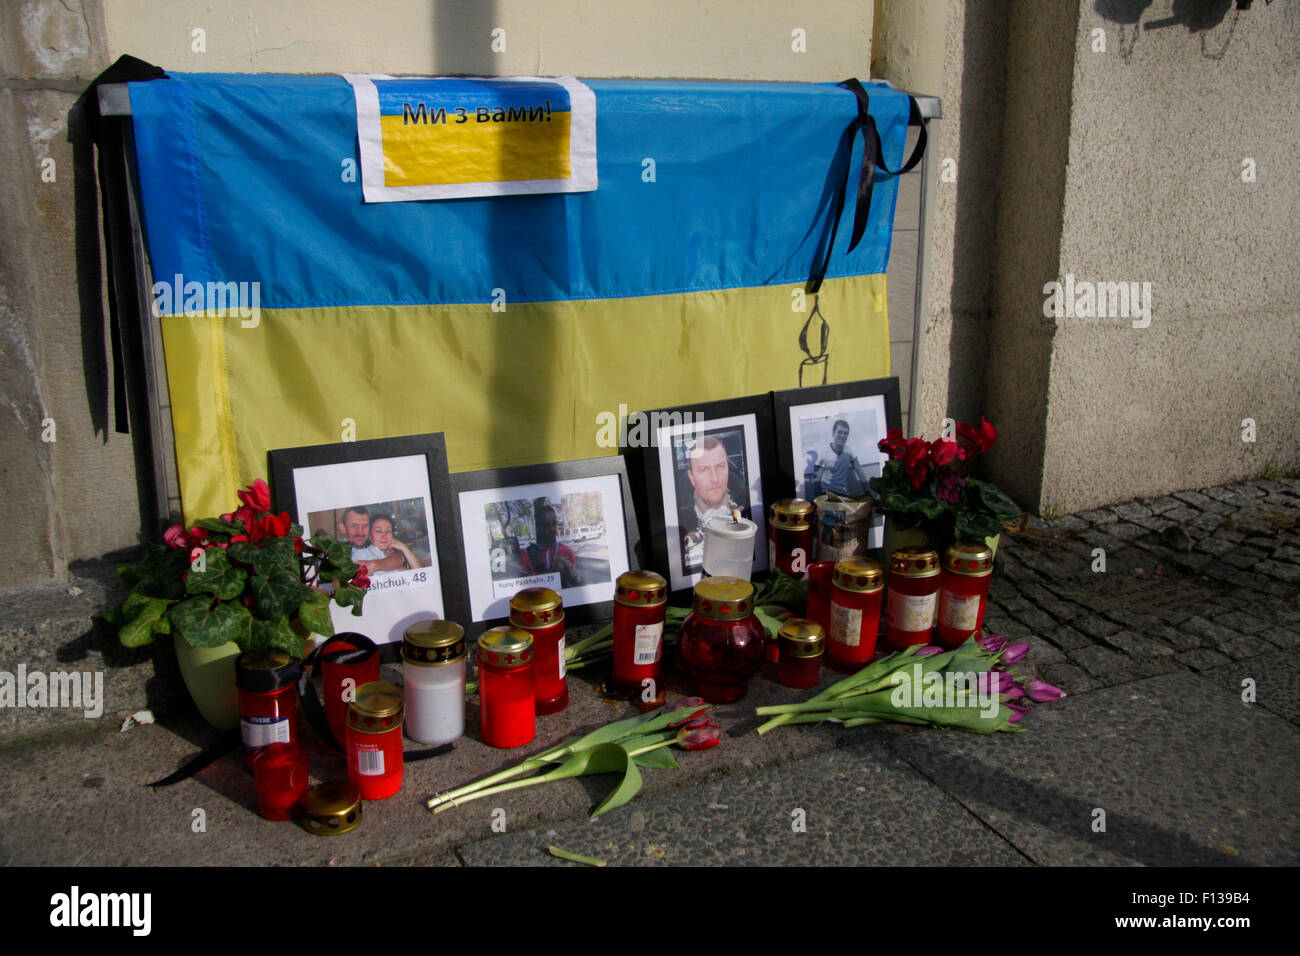 Bilder der am Maidan Platz in Kiew getoeteten Demonstranten an der ukrainischen Botschaft, 1. Maerz 2014, Berlin-Mitte. Stock Photo